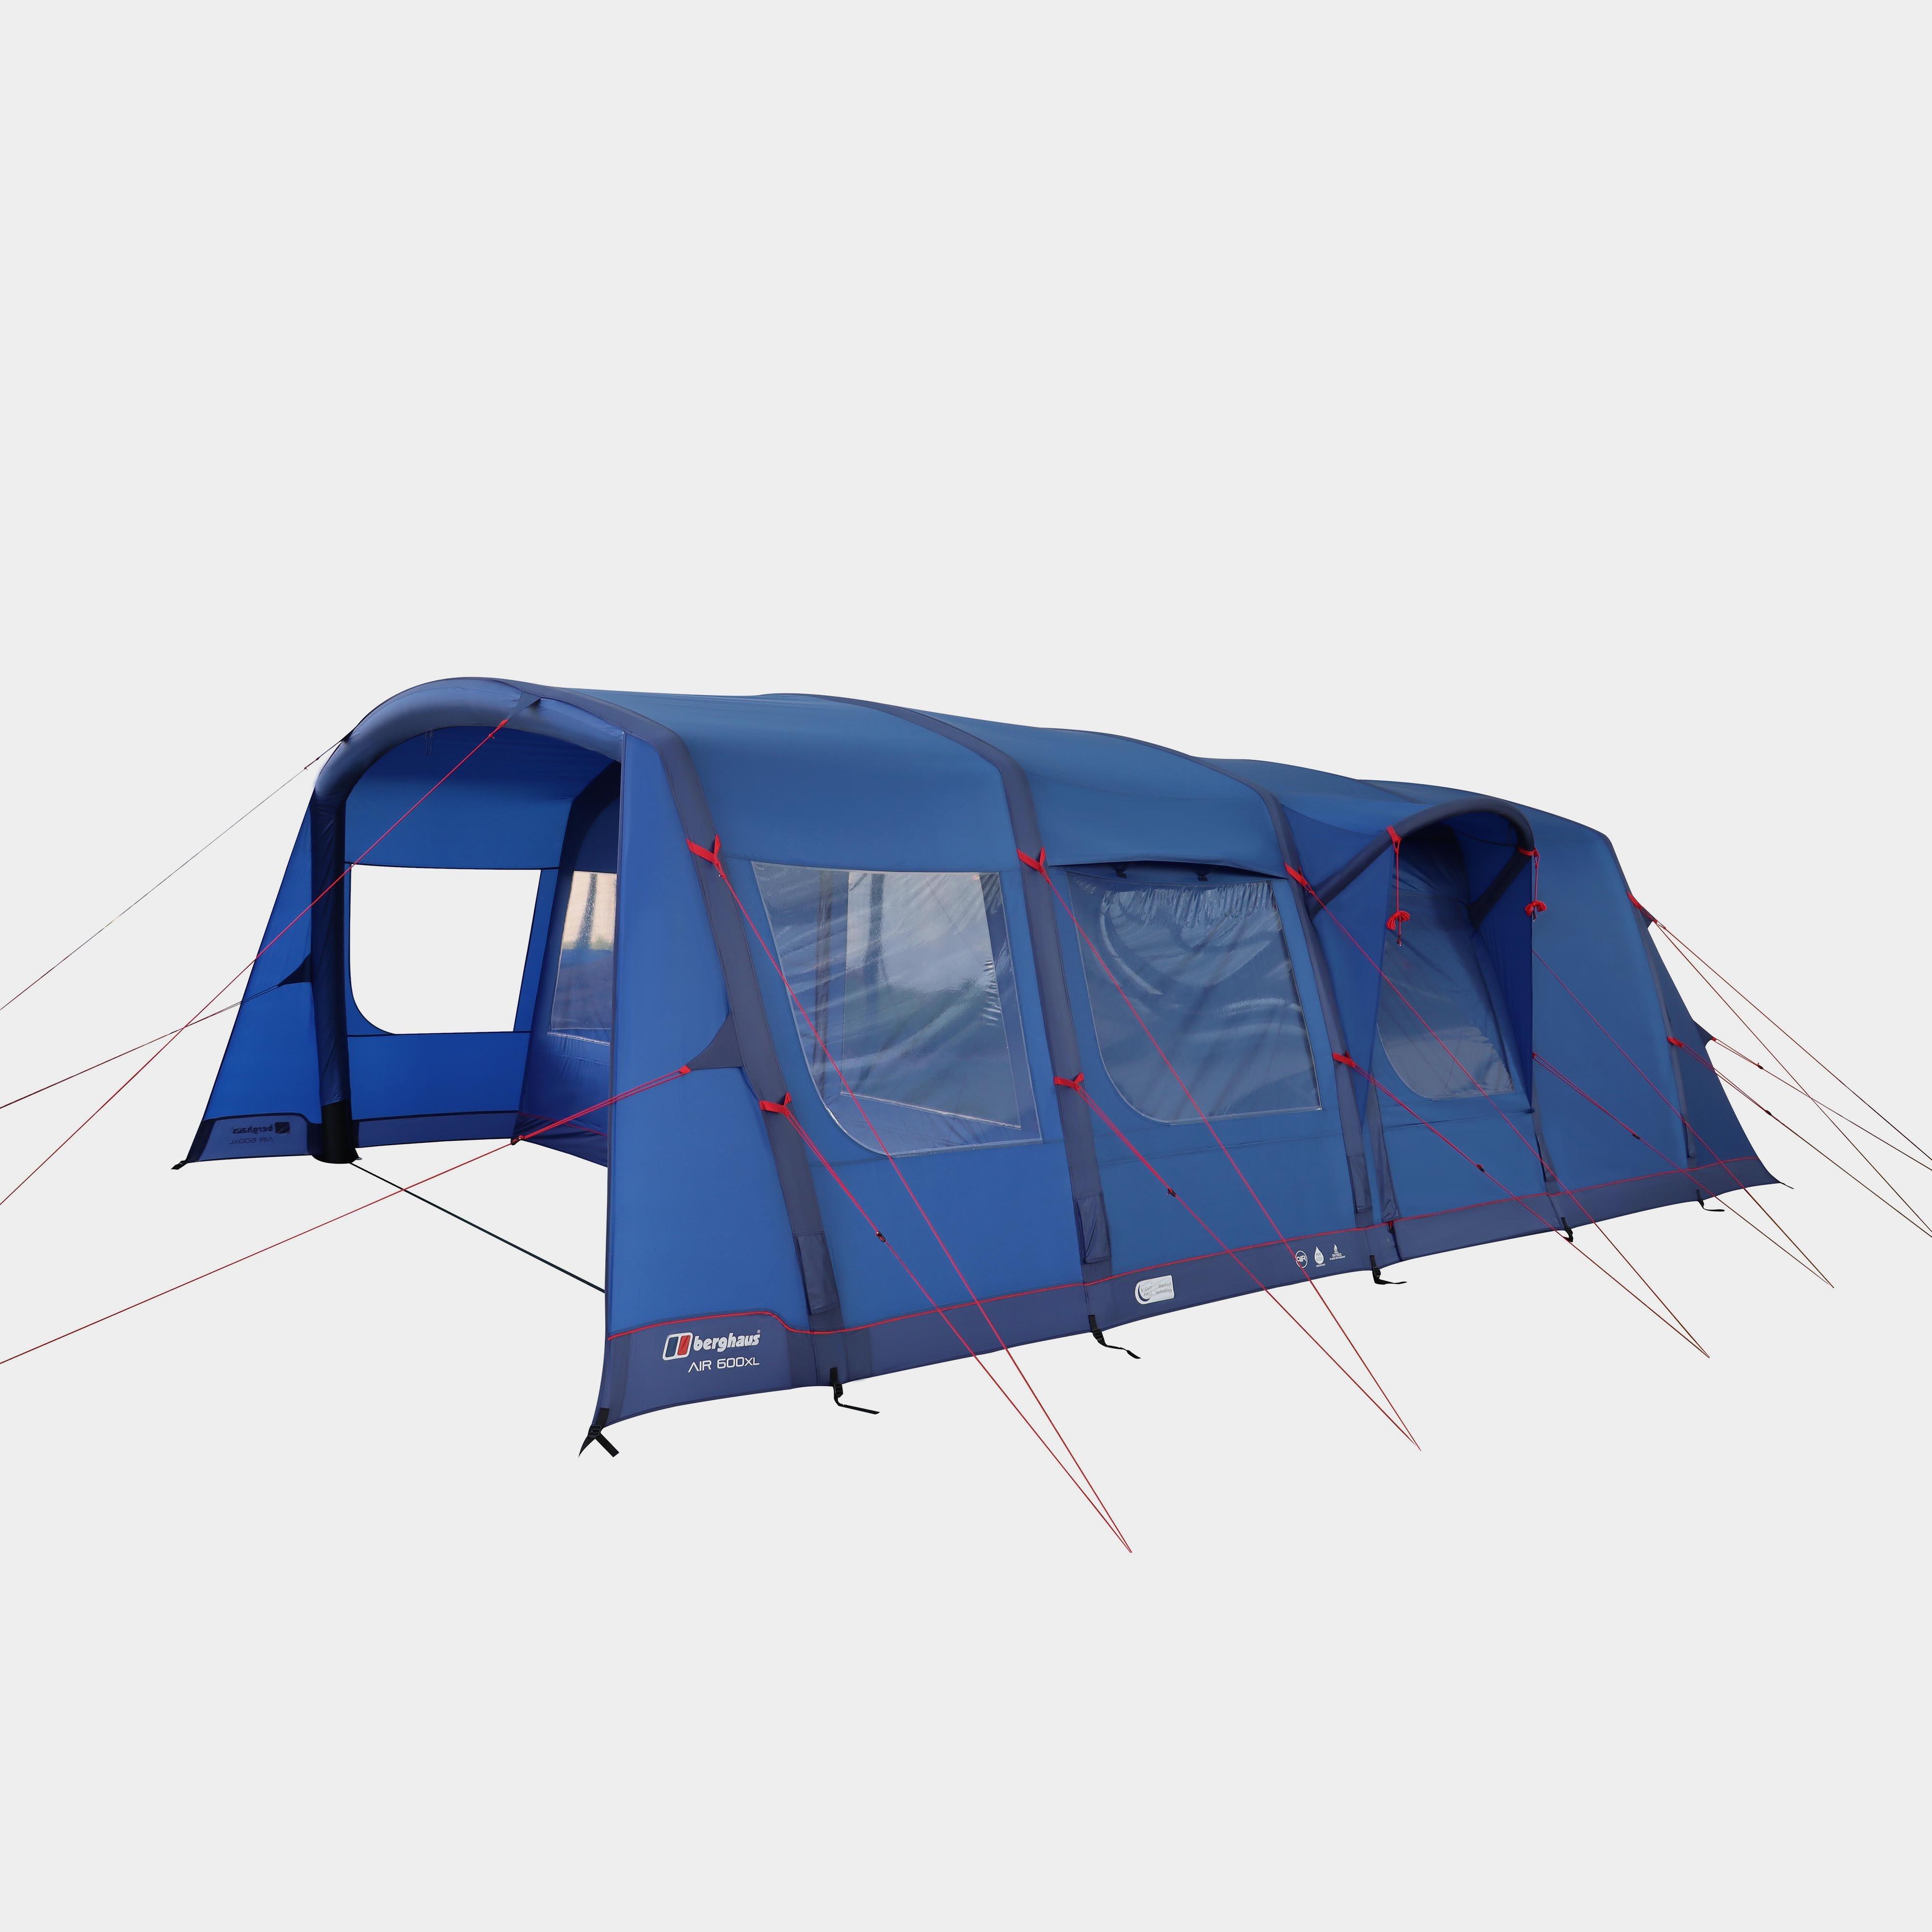  Berghaus 600XL Nightfall Air Tent, Blue